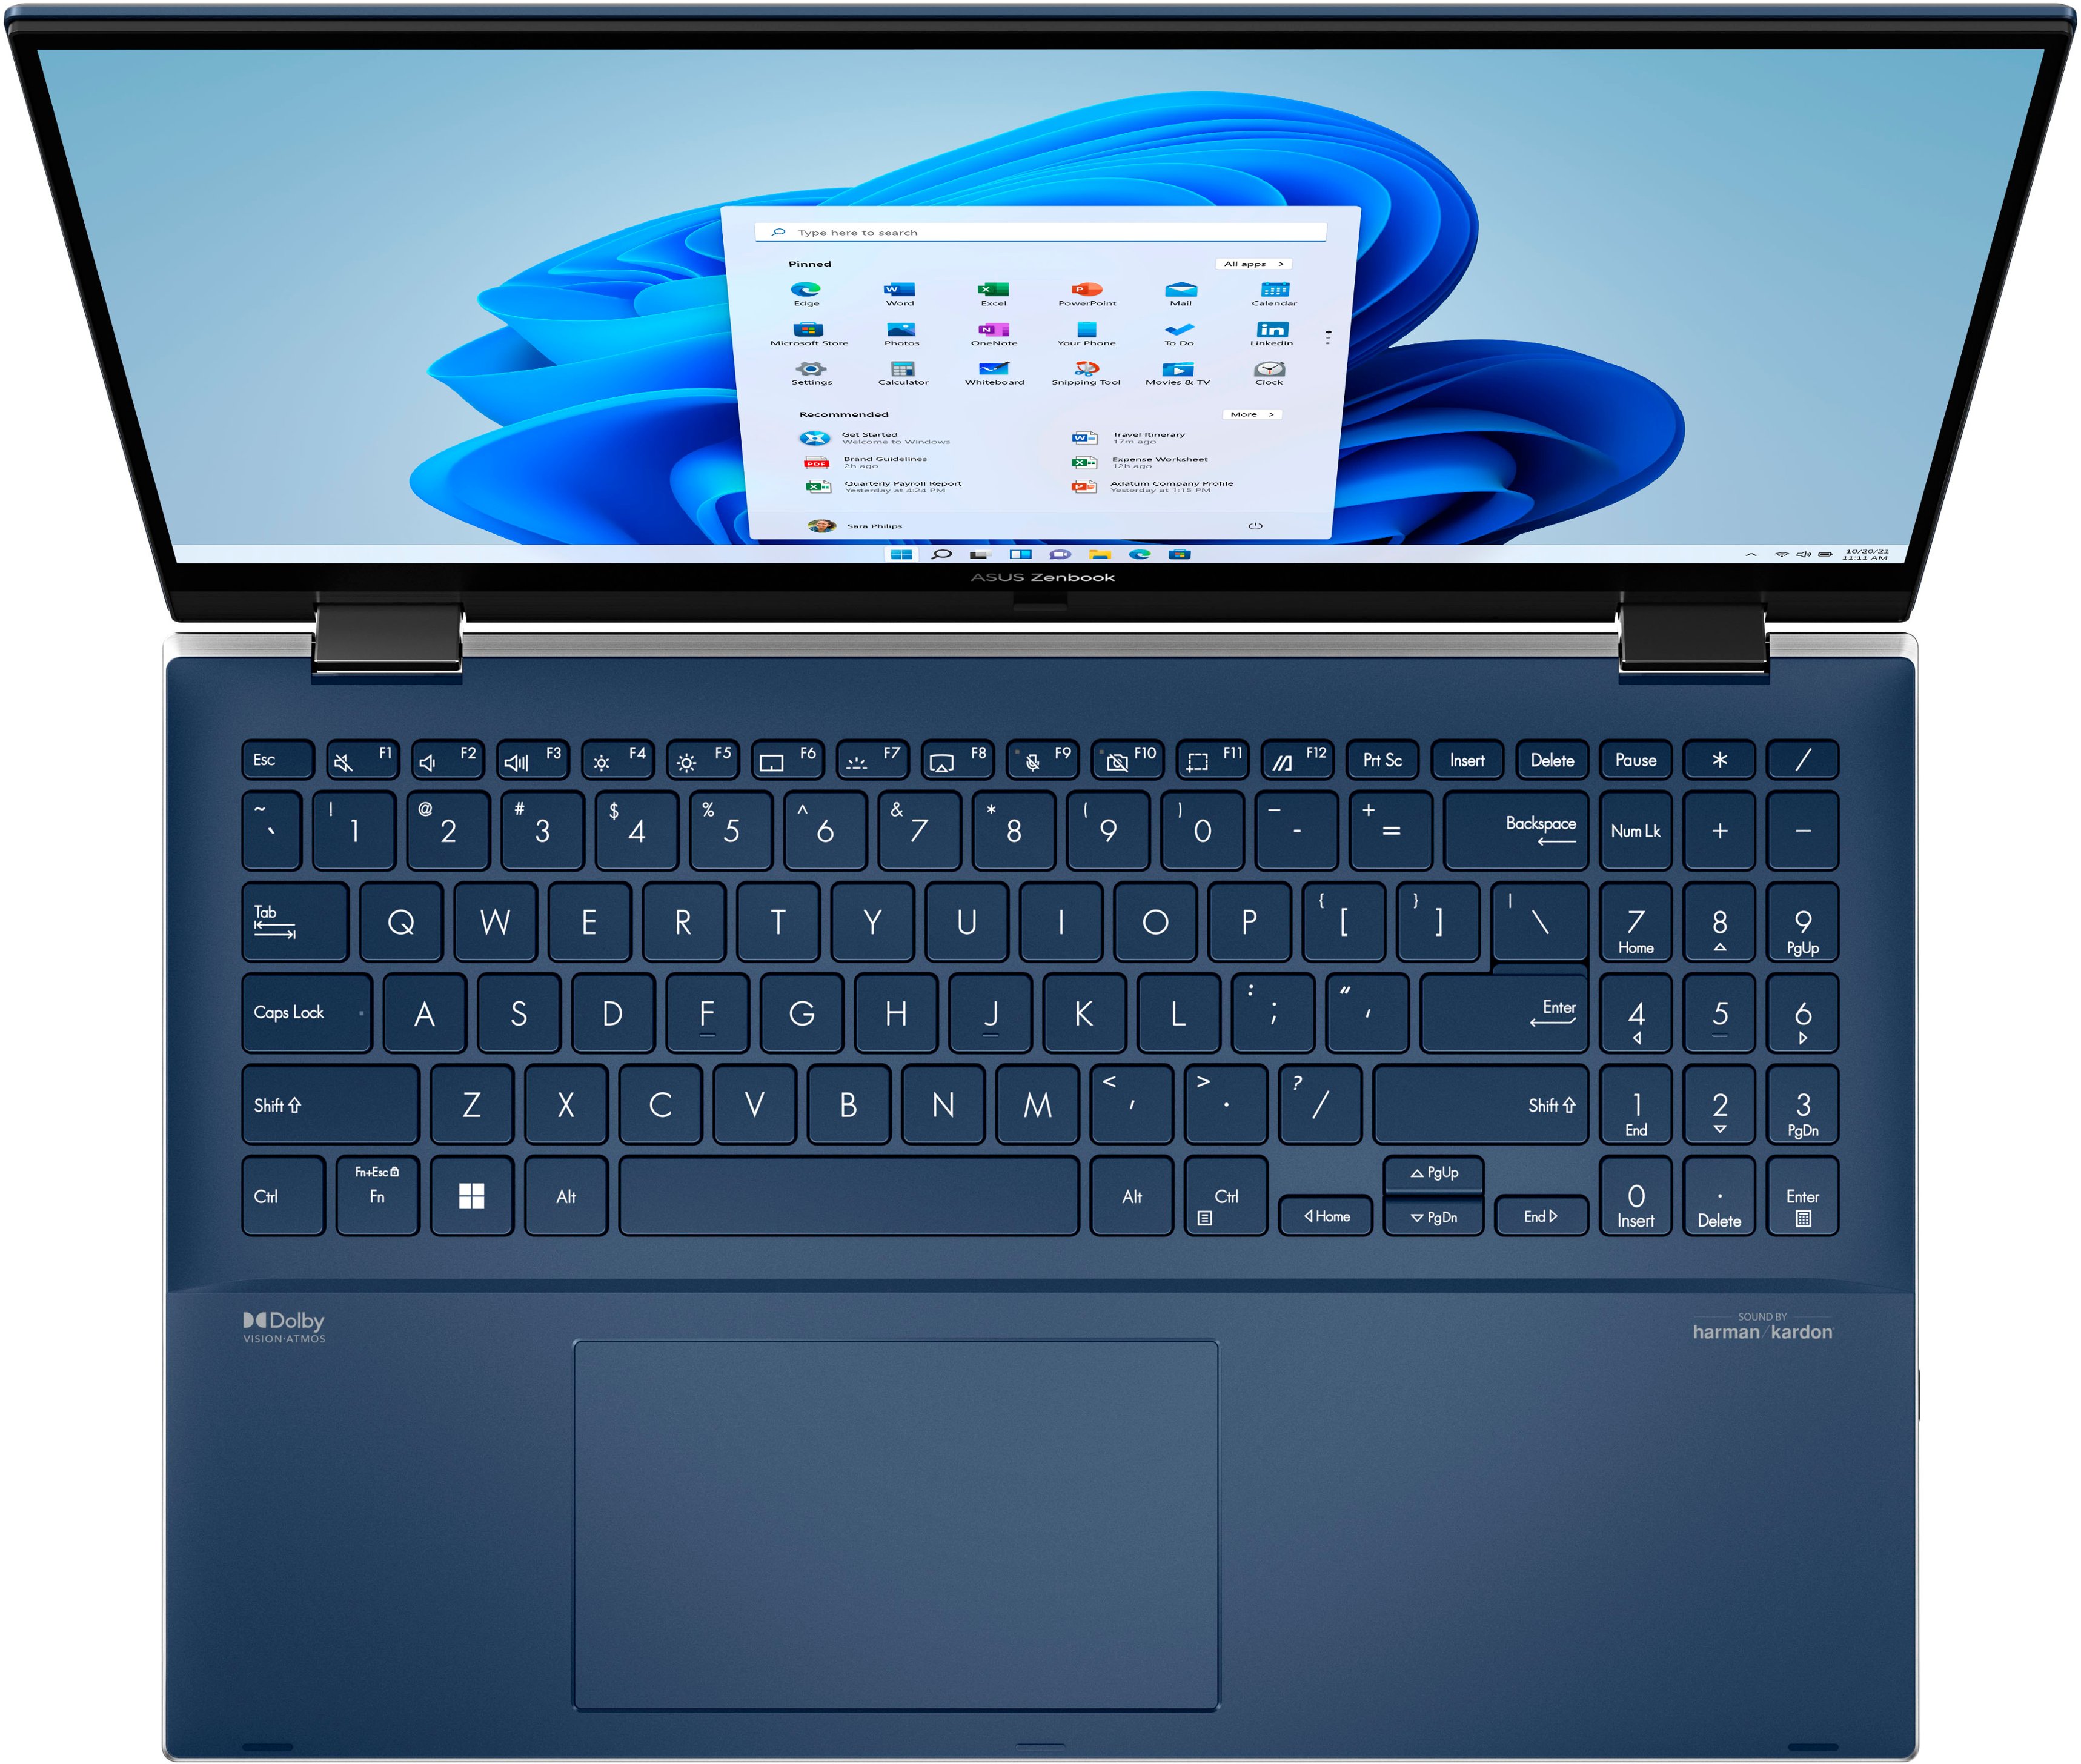 ASUS Zenbook Flip 14 UX461｜Laptops For Home｜ASUS USA